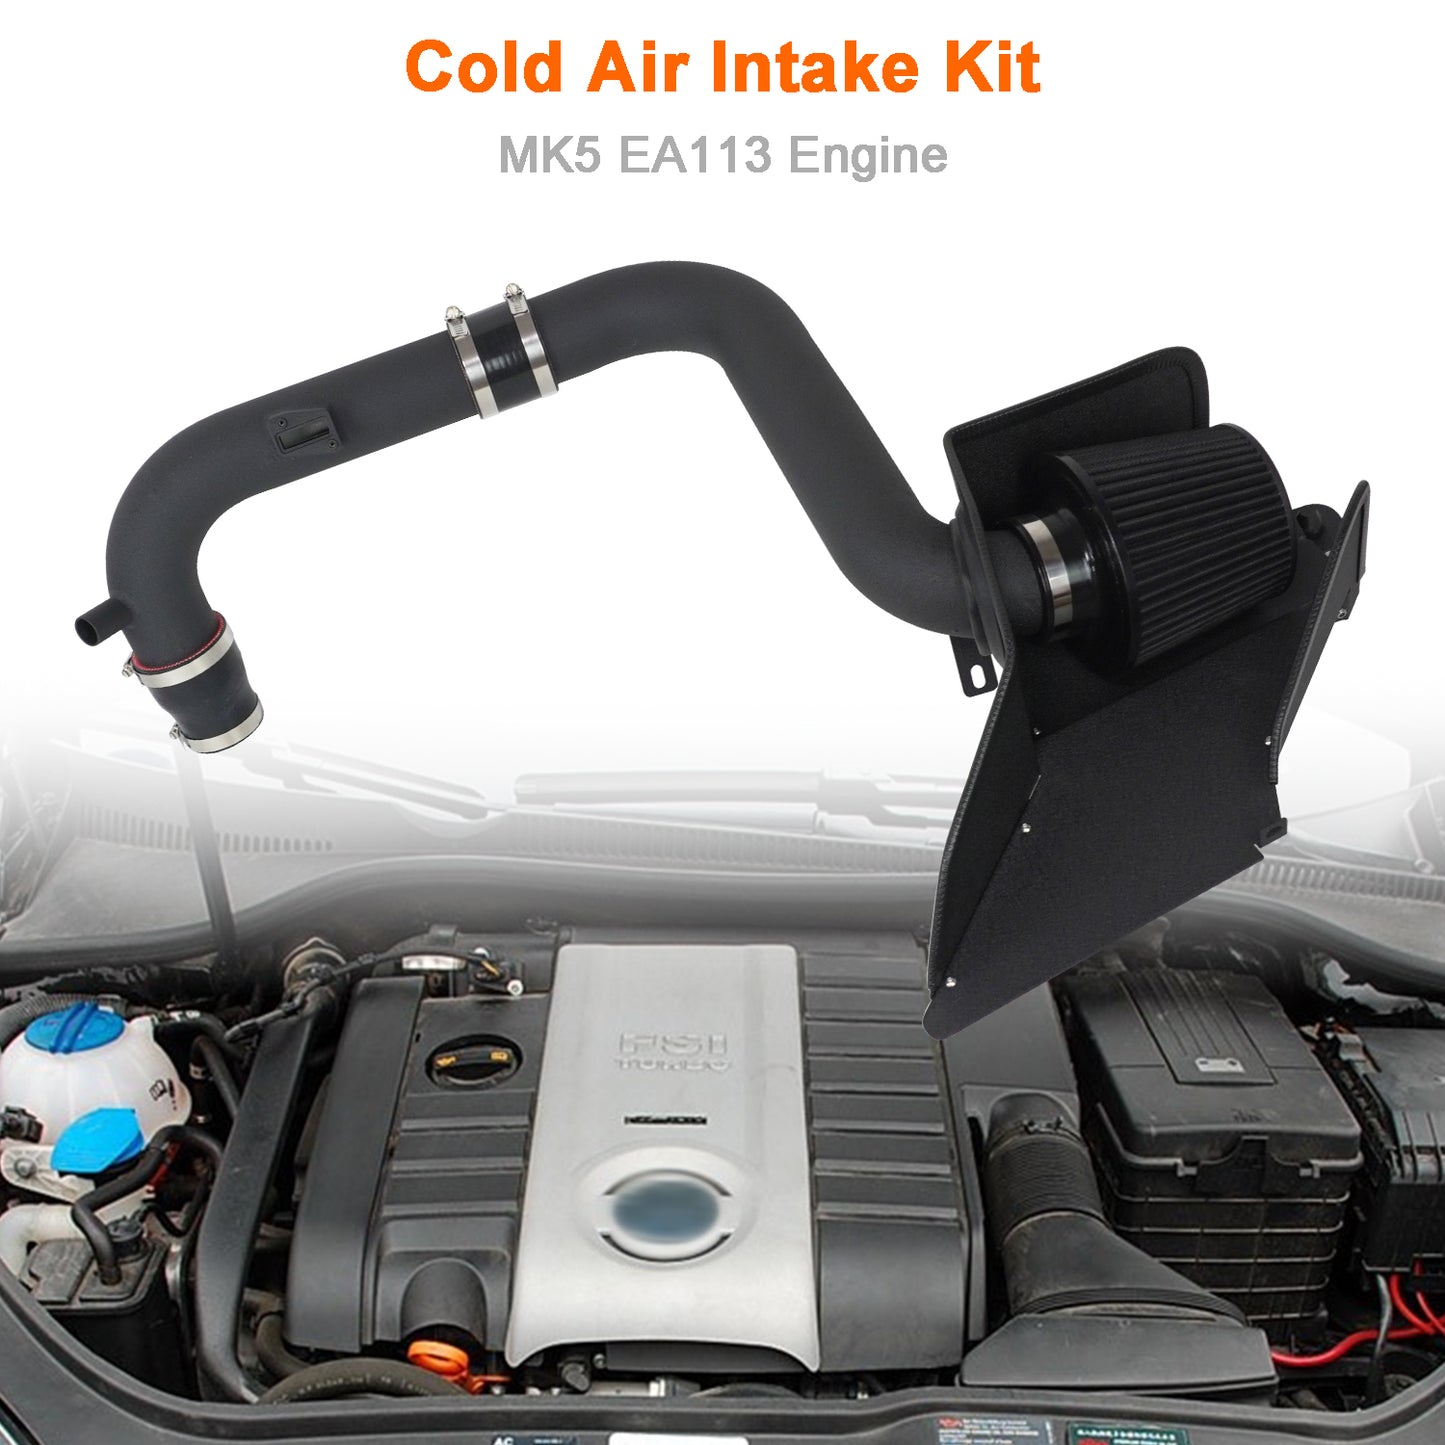 Volkswagen Golf MK5 MK6 GTI Cold Air Intake Kit also fits Passat Audi TT A3 Skoda Octavia EA888 GEN2 1.8T 2.0T